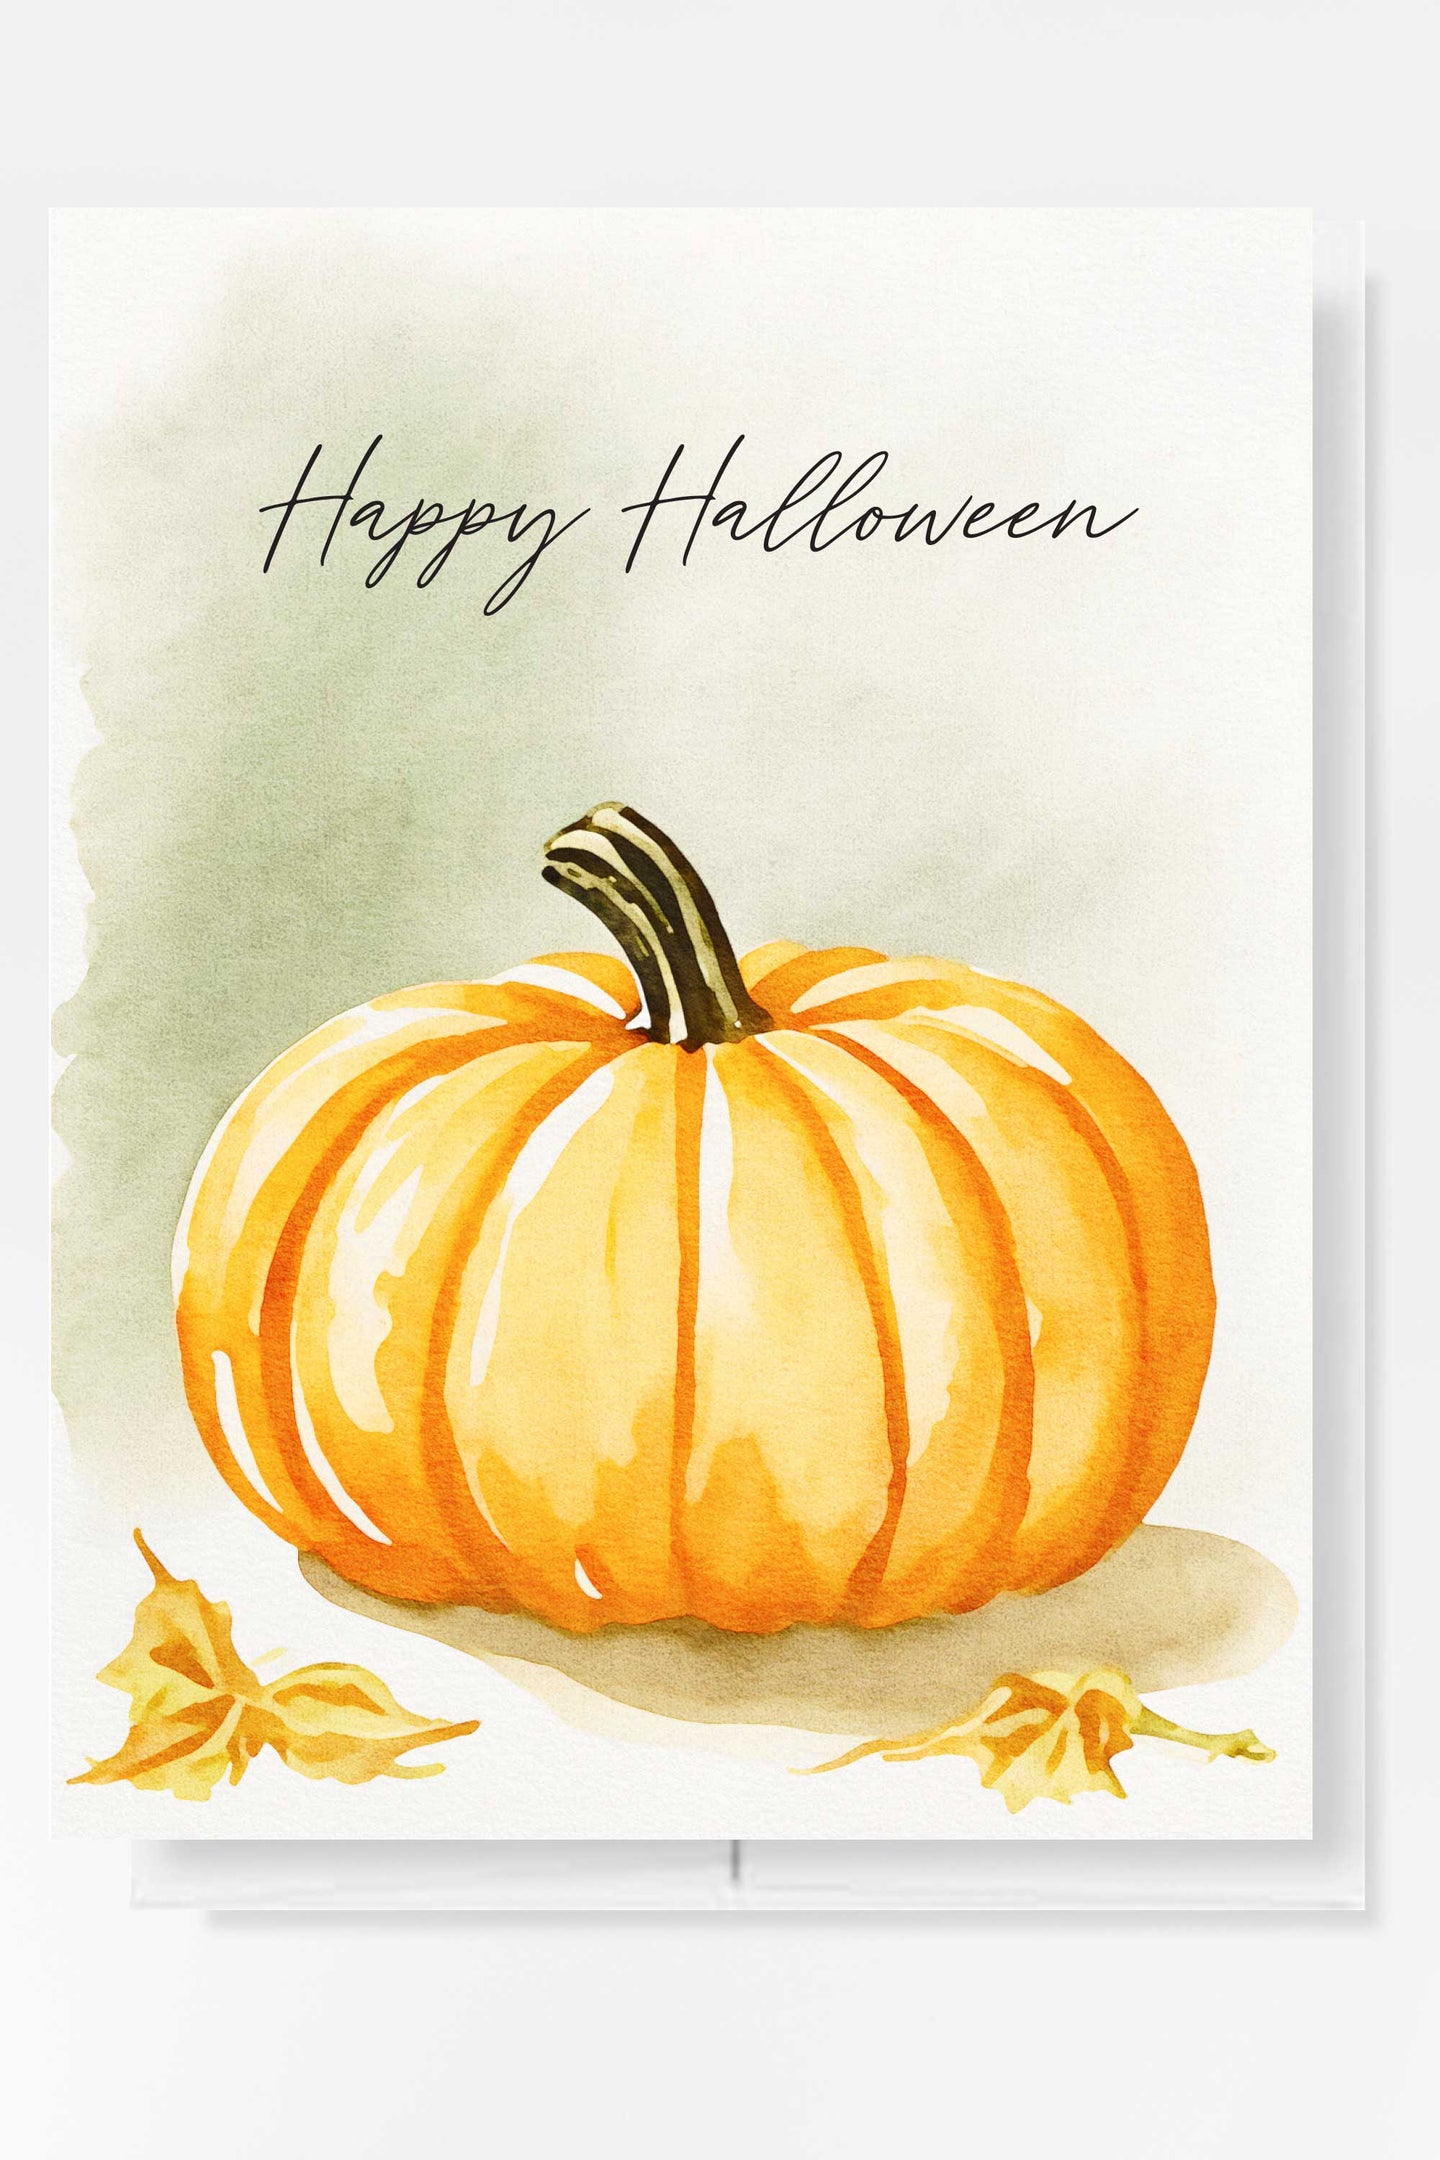 Pumpkin Happy Halloween Card Autumn Fall Watercolor Holiday